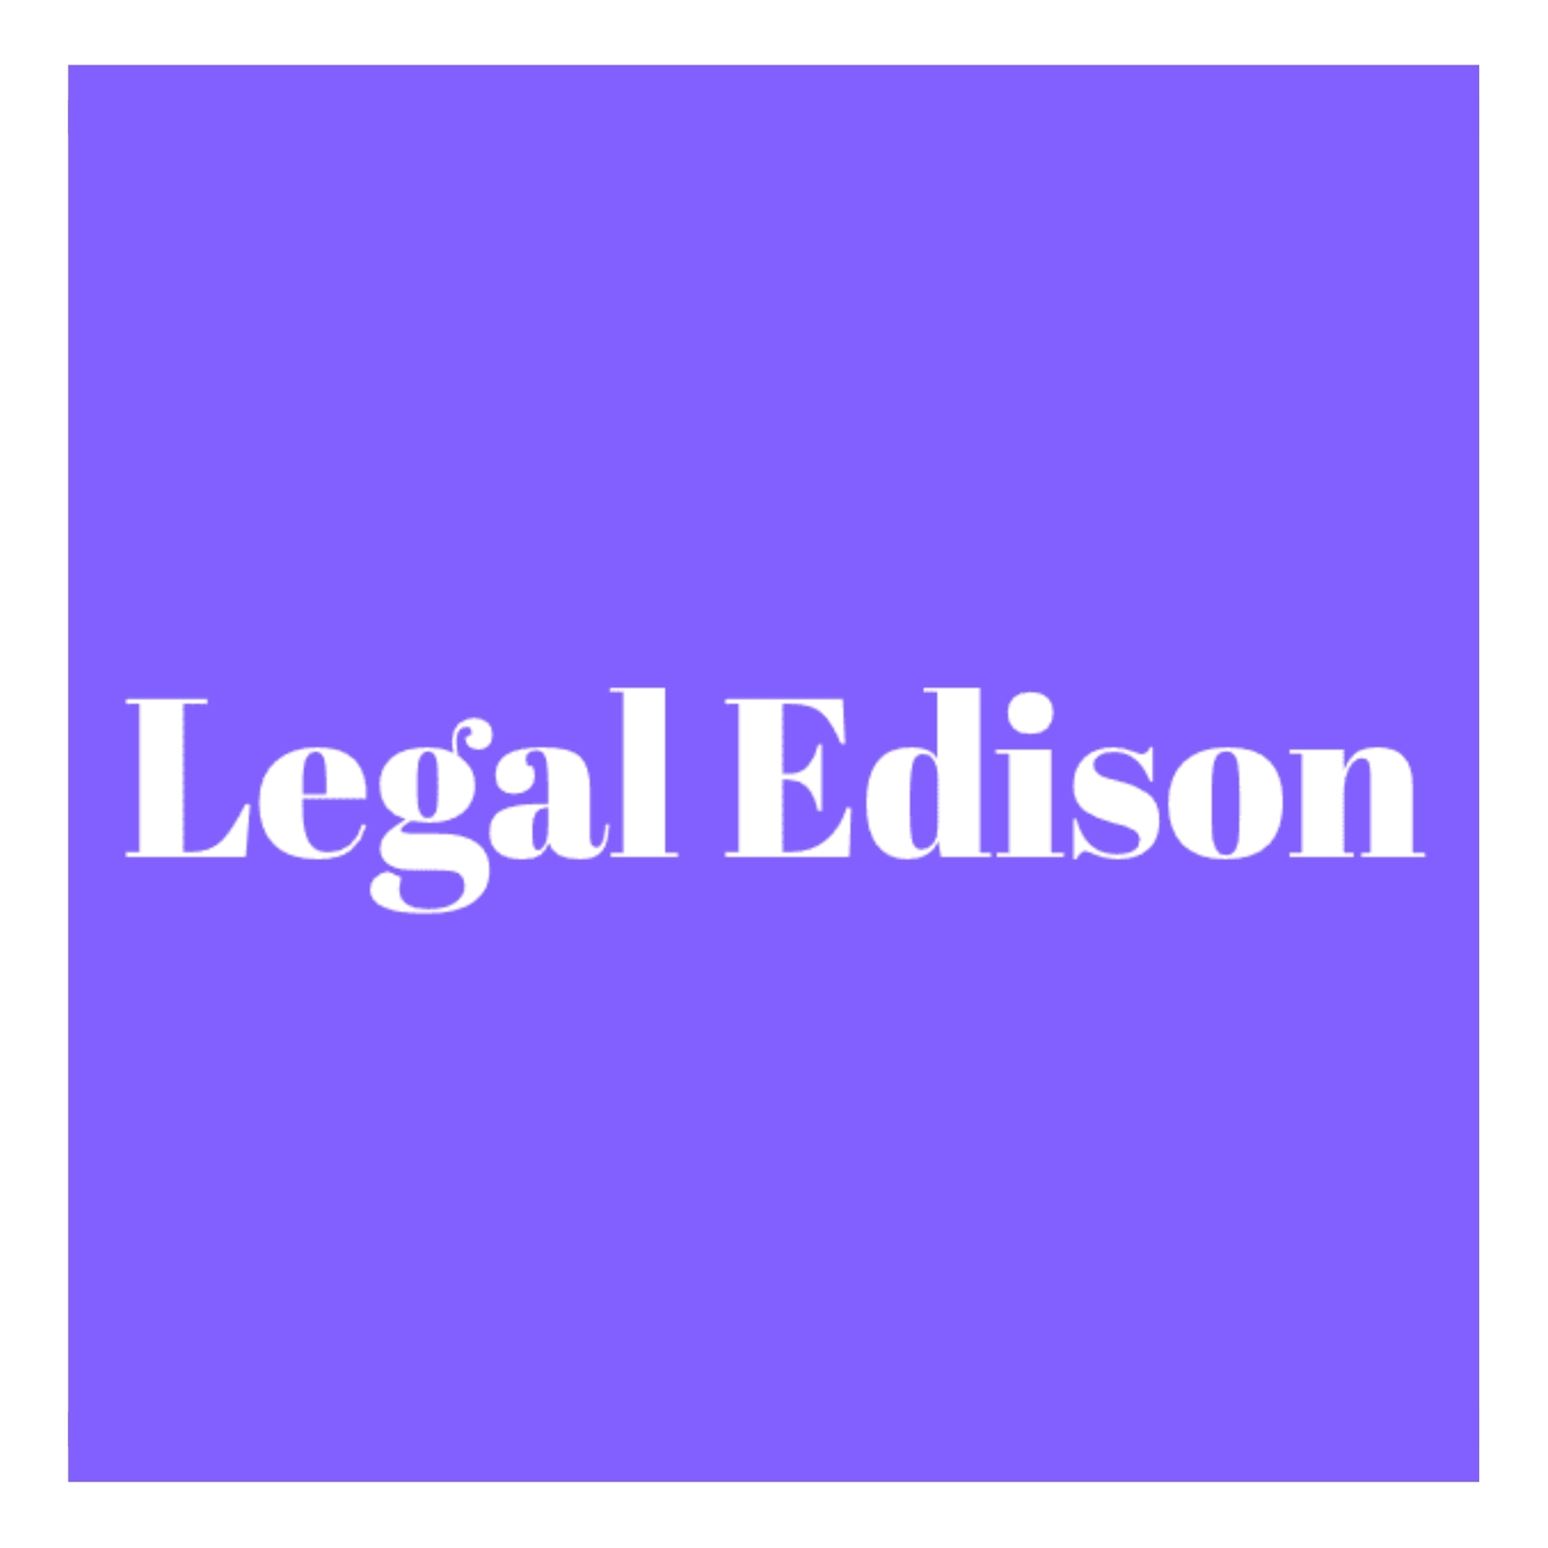 Legal Edison Logo